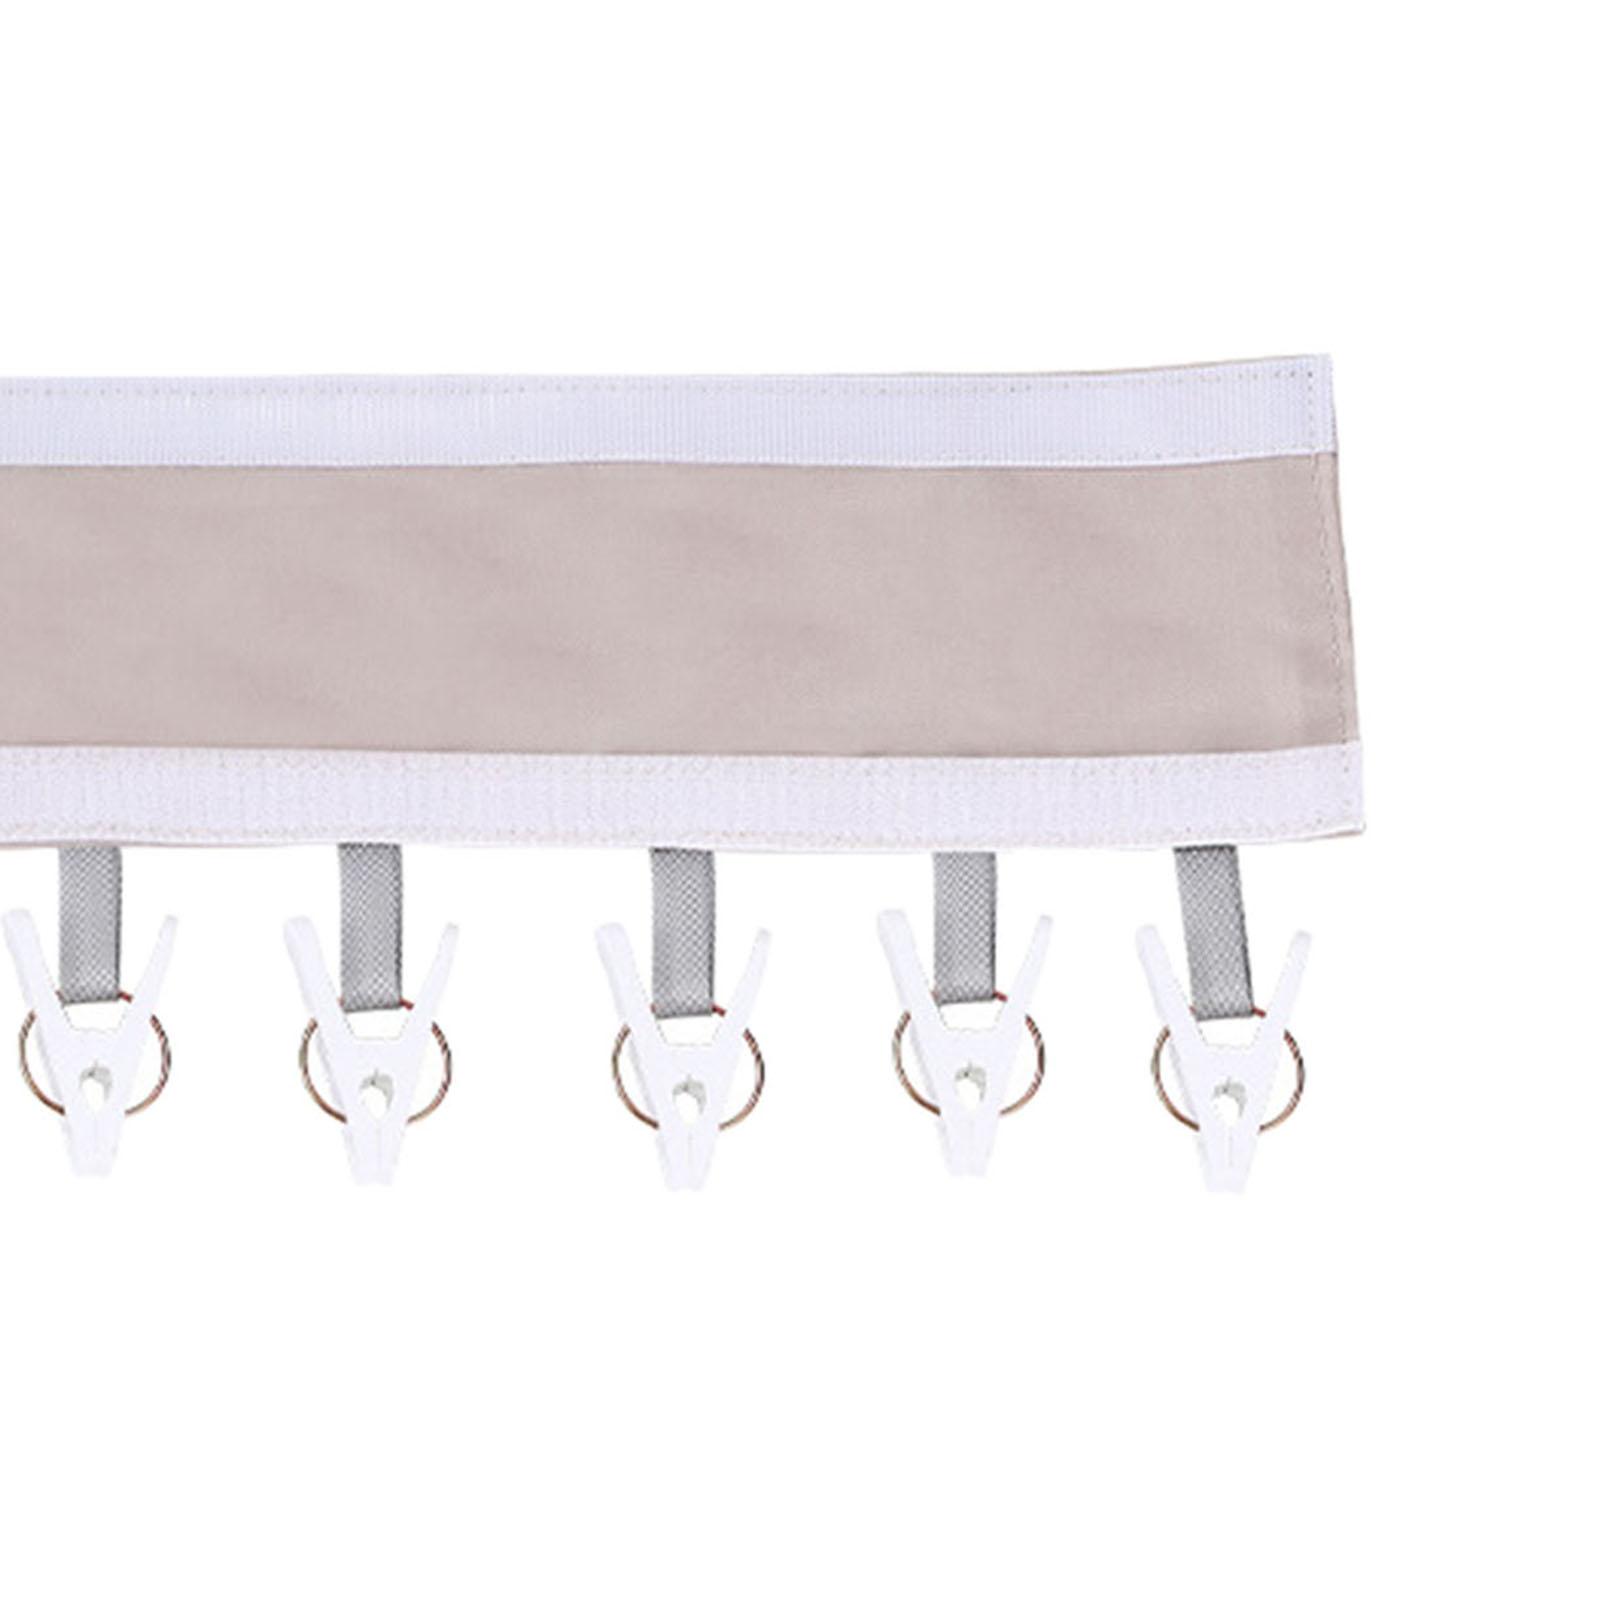 Hanger Clips Multifunctional Portable Hangers for Bathroom Household Caps